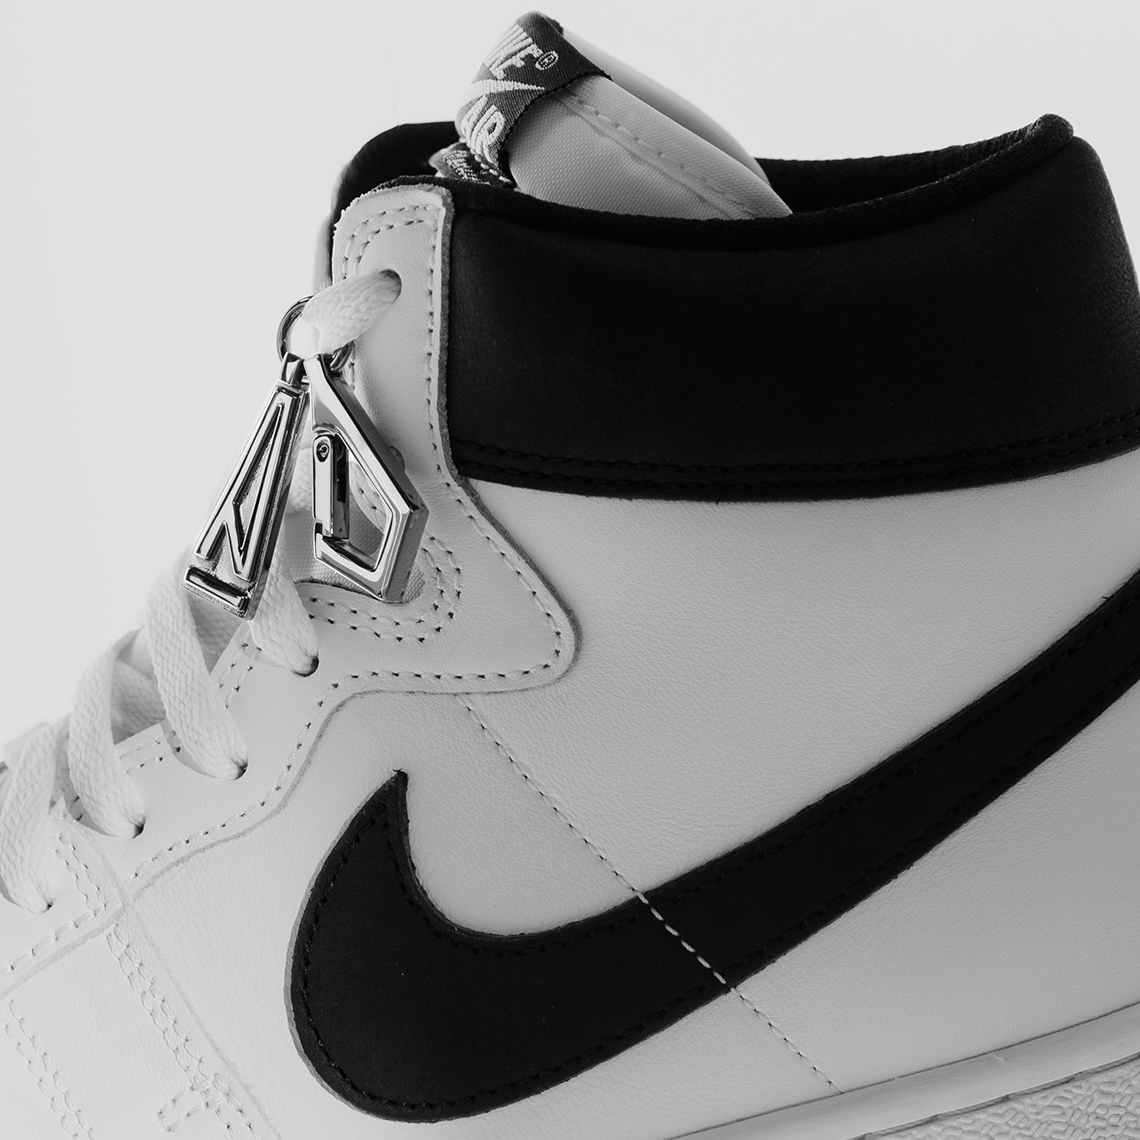 More Dior Air Jordan 1s Reportedly on the Way Nike Air Jordan Flight 1 Black Grey White Gs 2013 Sz 6y 2